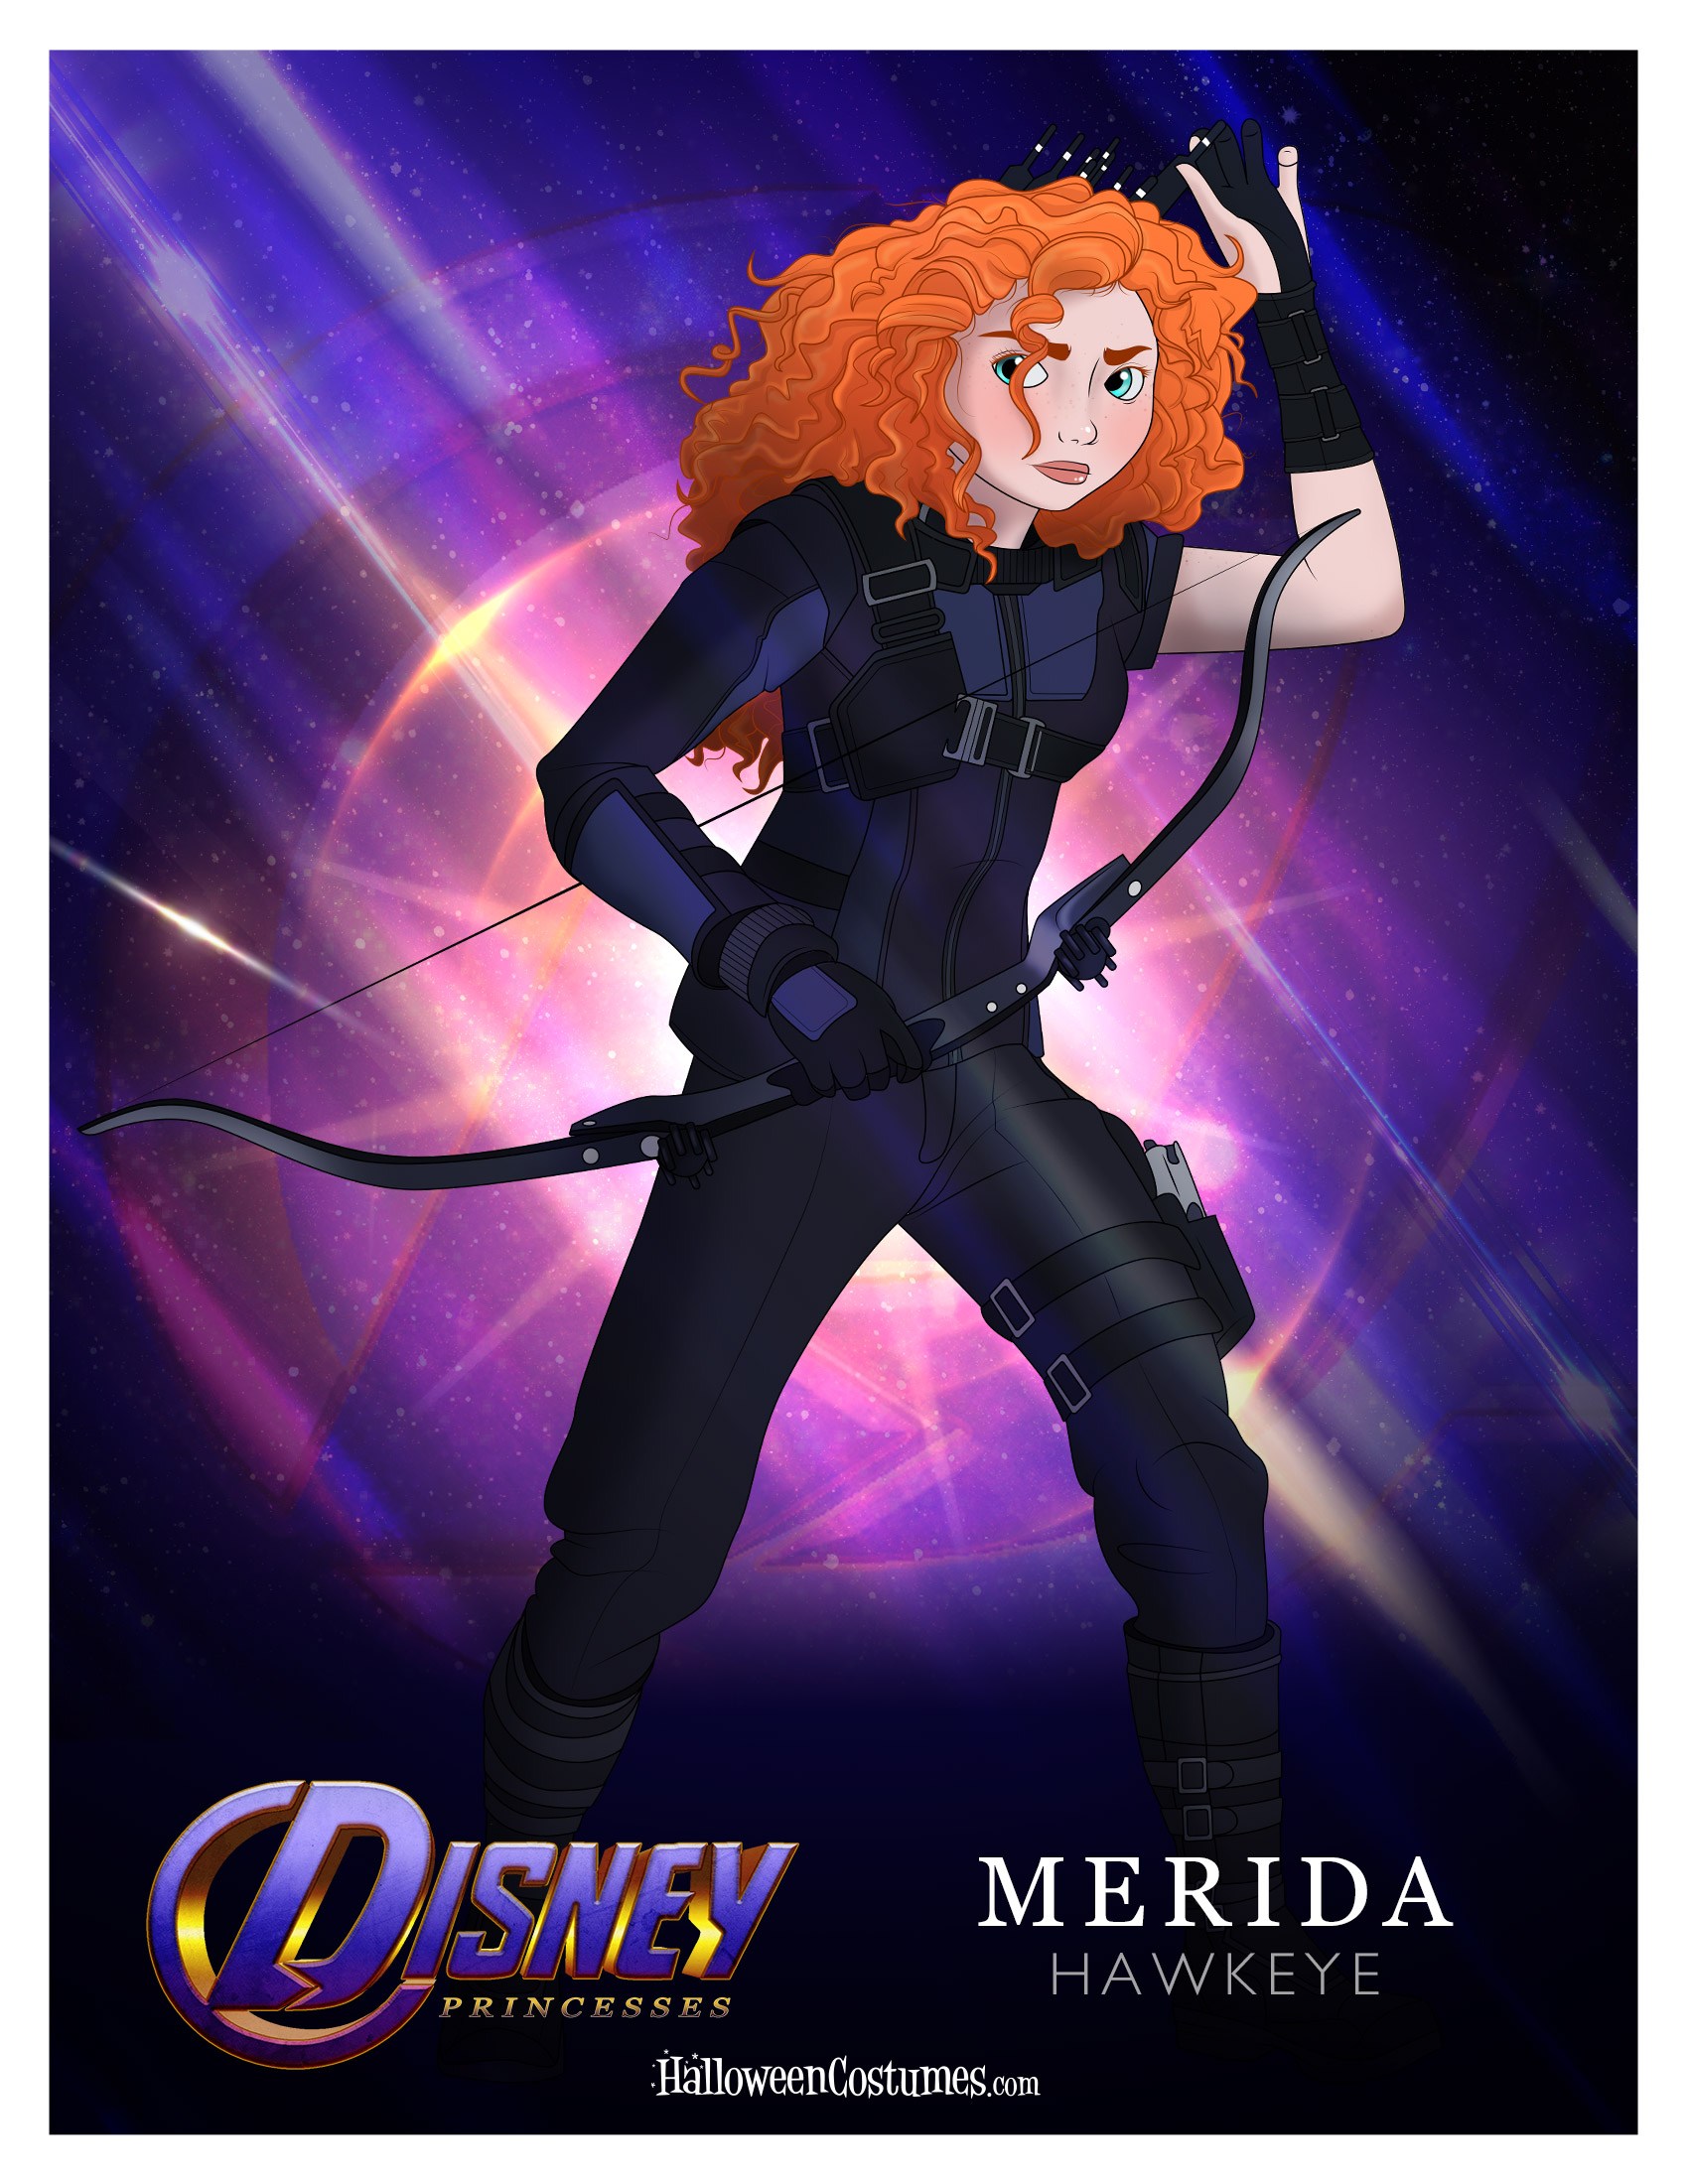 Princess Merida as Hawkeye